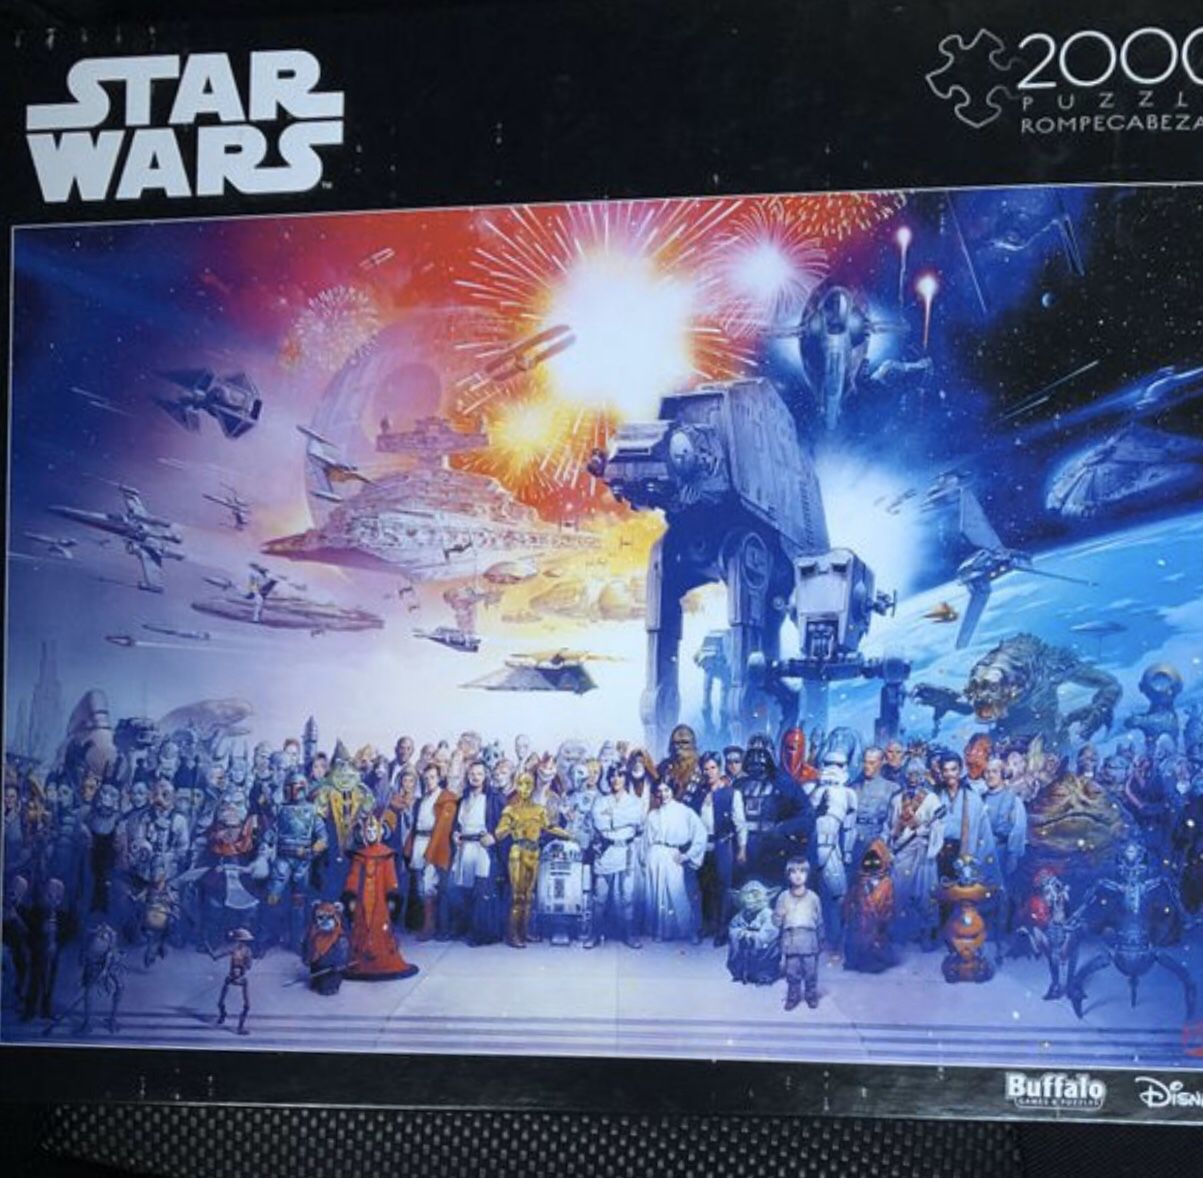 Buffalo games, Disney,Star Wars puzzle 2000 piece, new in box